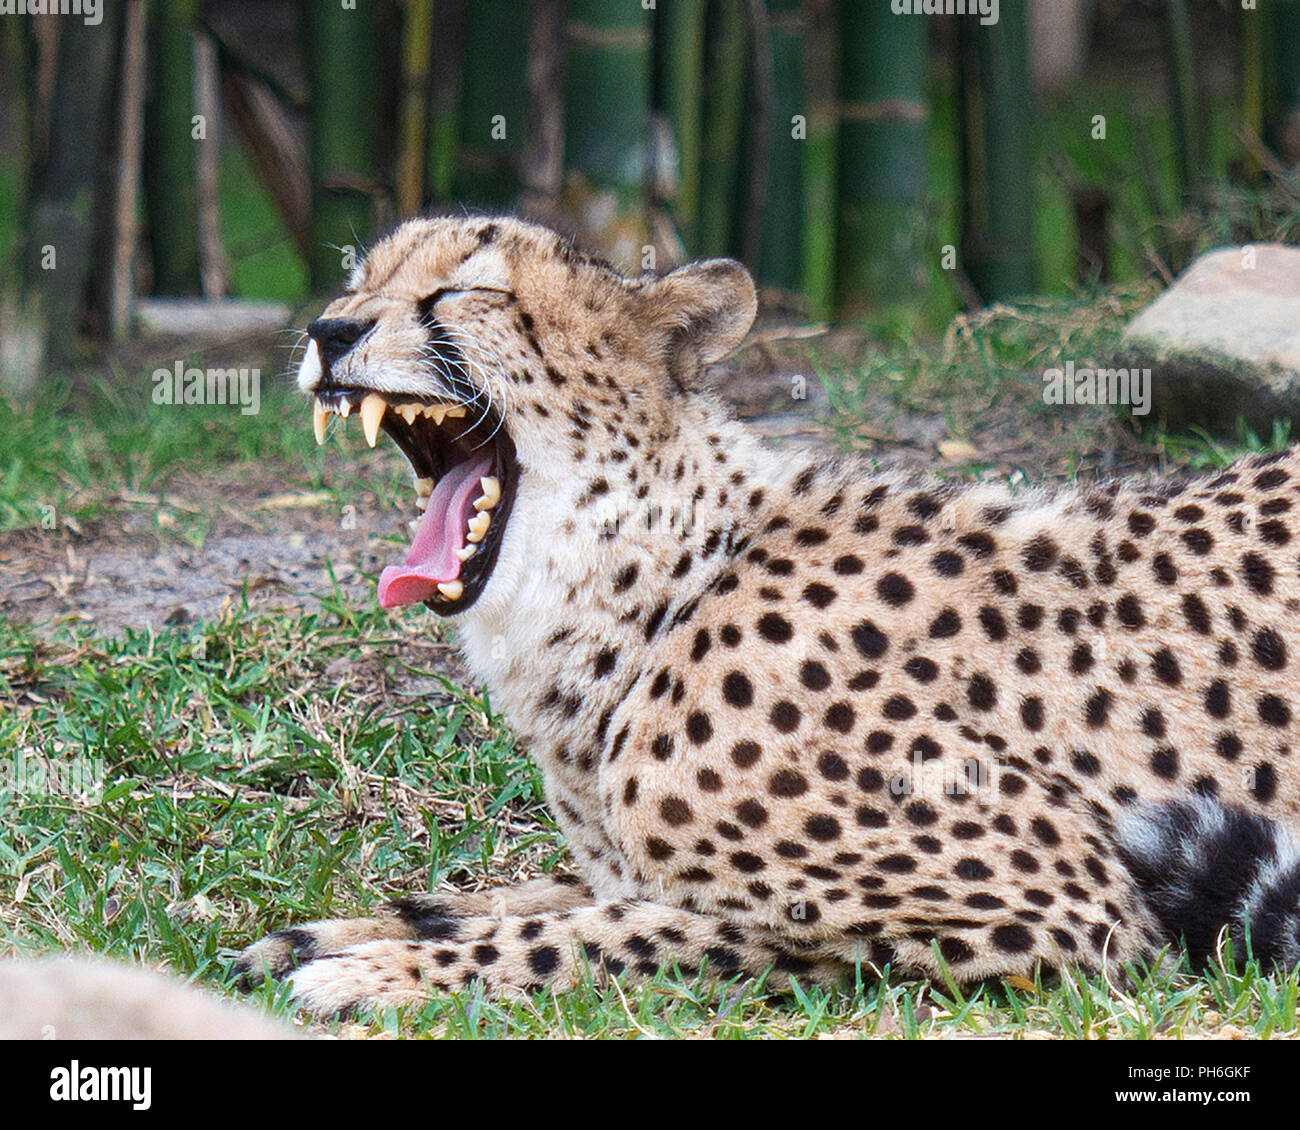 Geparden im Zoo die Sonne genießen. Animal Kingdom. Stockfoto